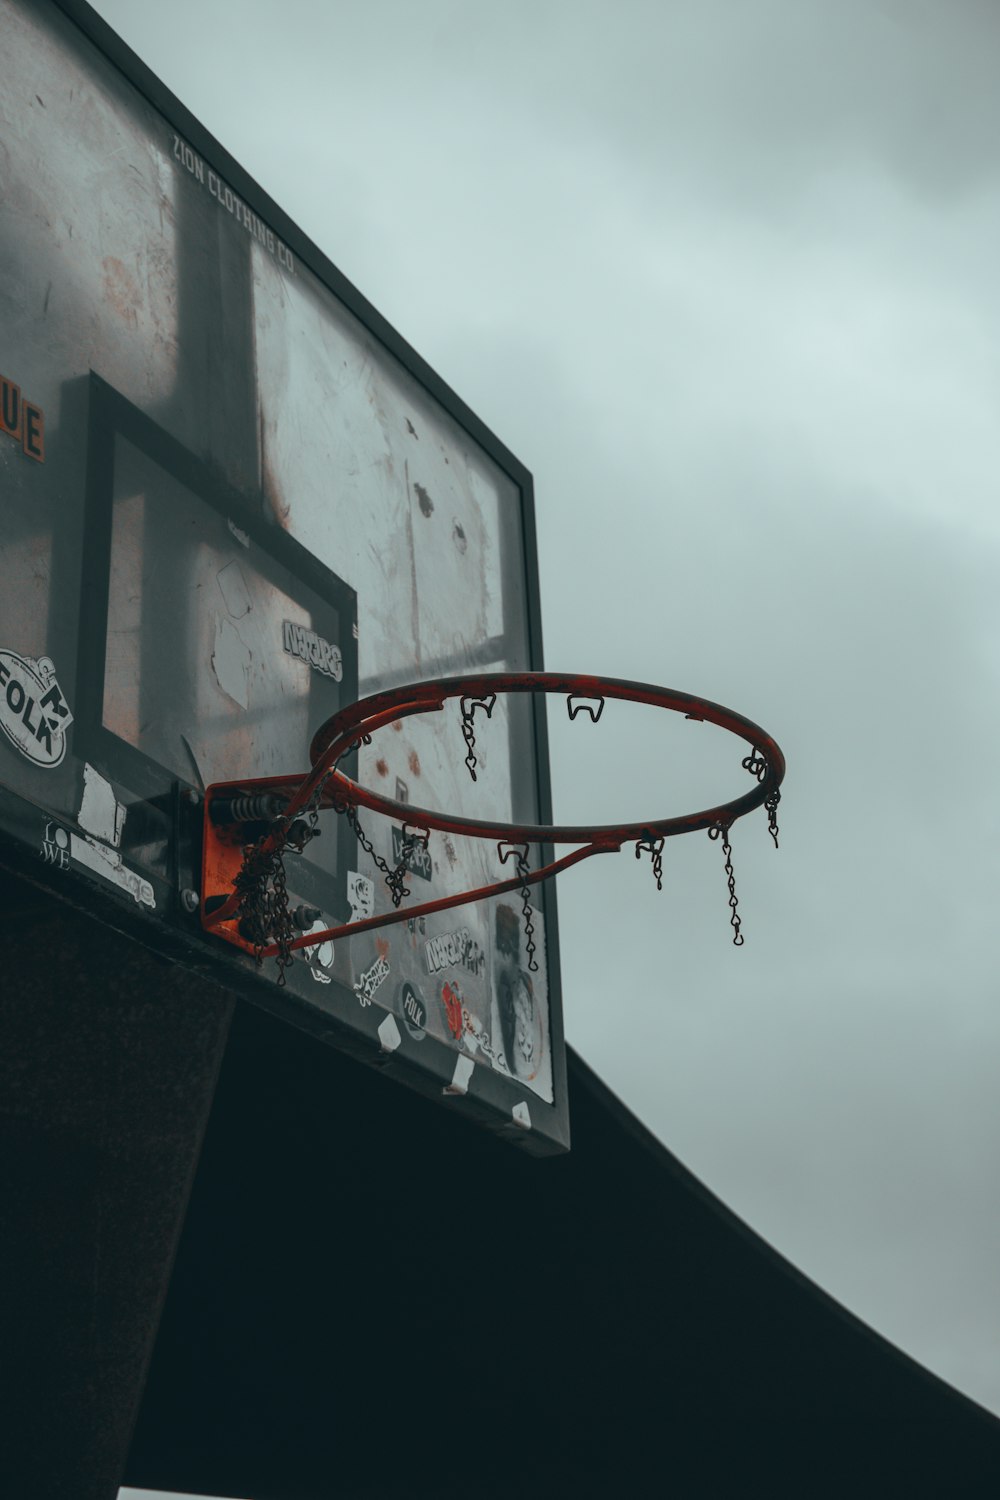 a basketball going through the rim of a basketball hoop